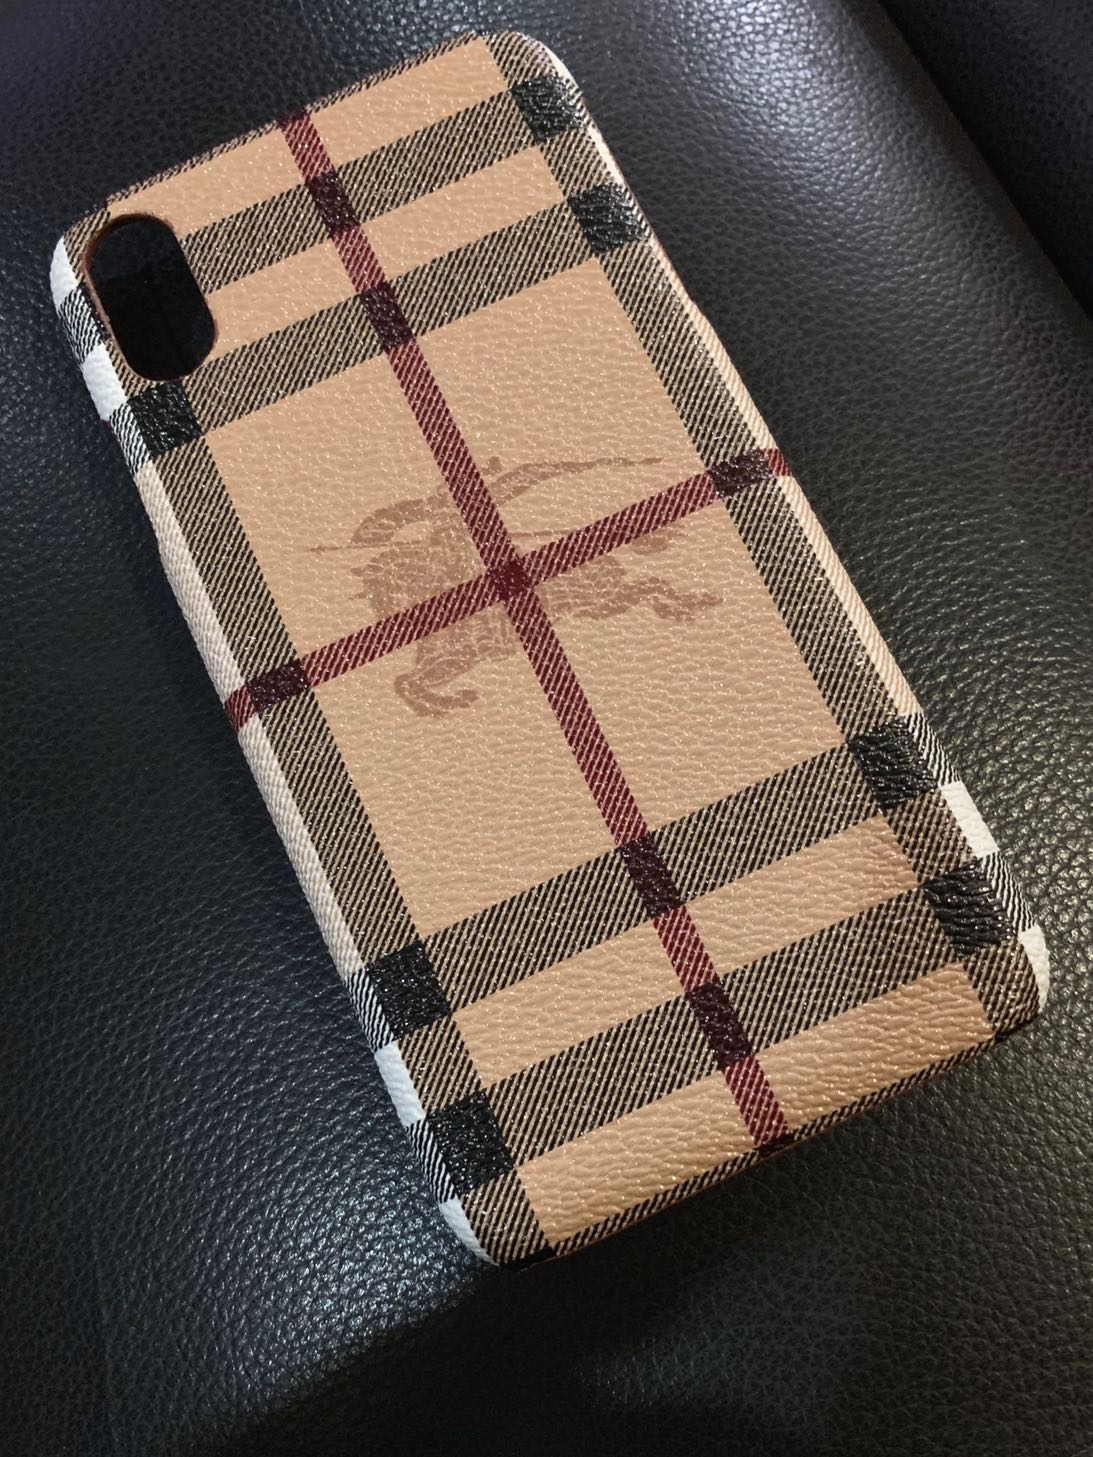 burberry iphone x max case